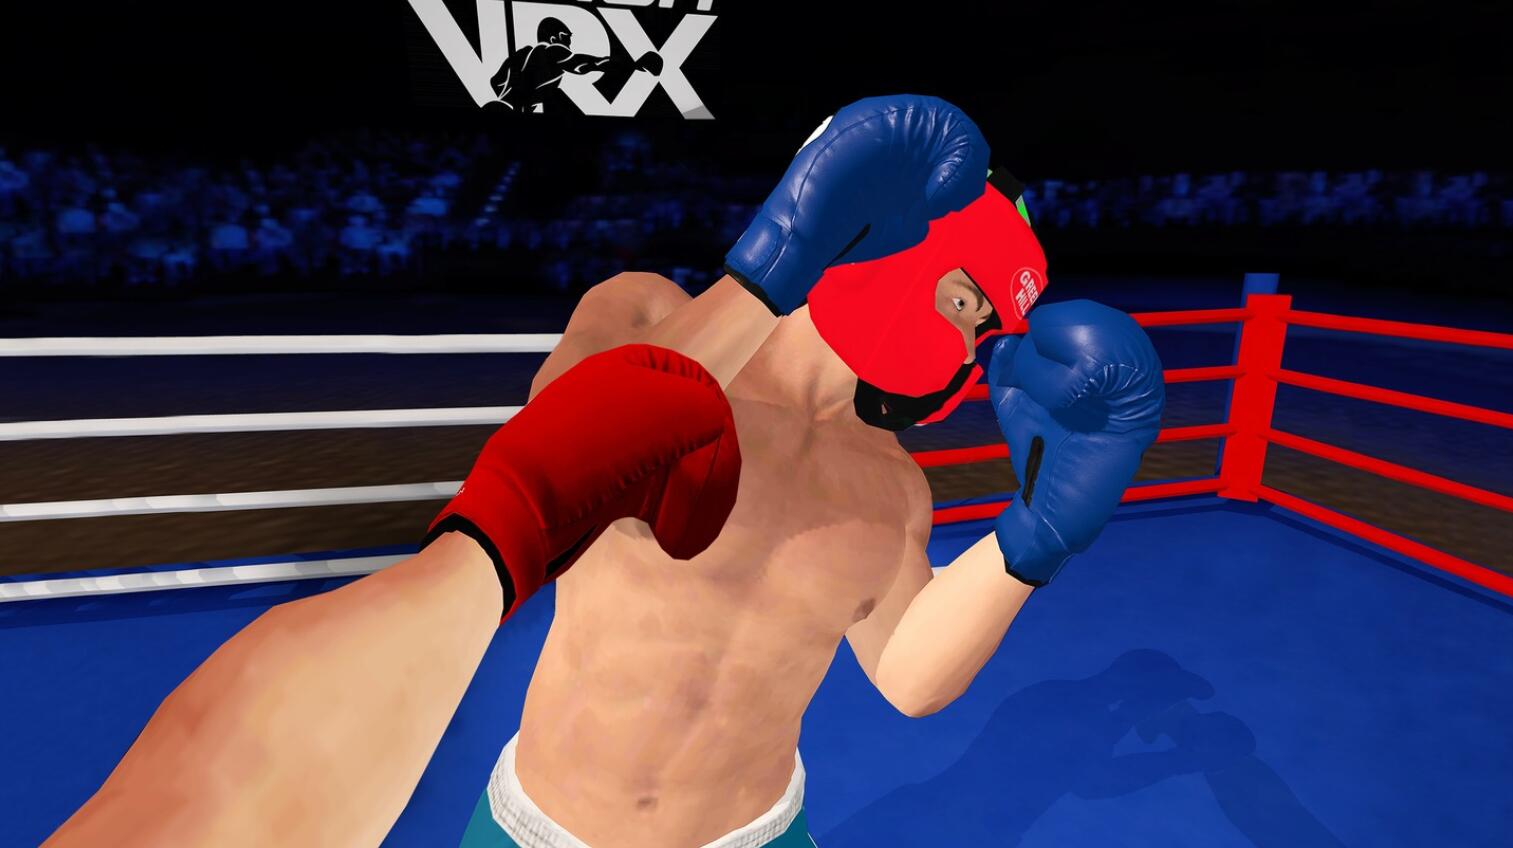 Oculus Quest 游戏《拳击游戏》PuchVRX – Boxing Game